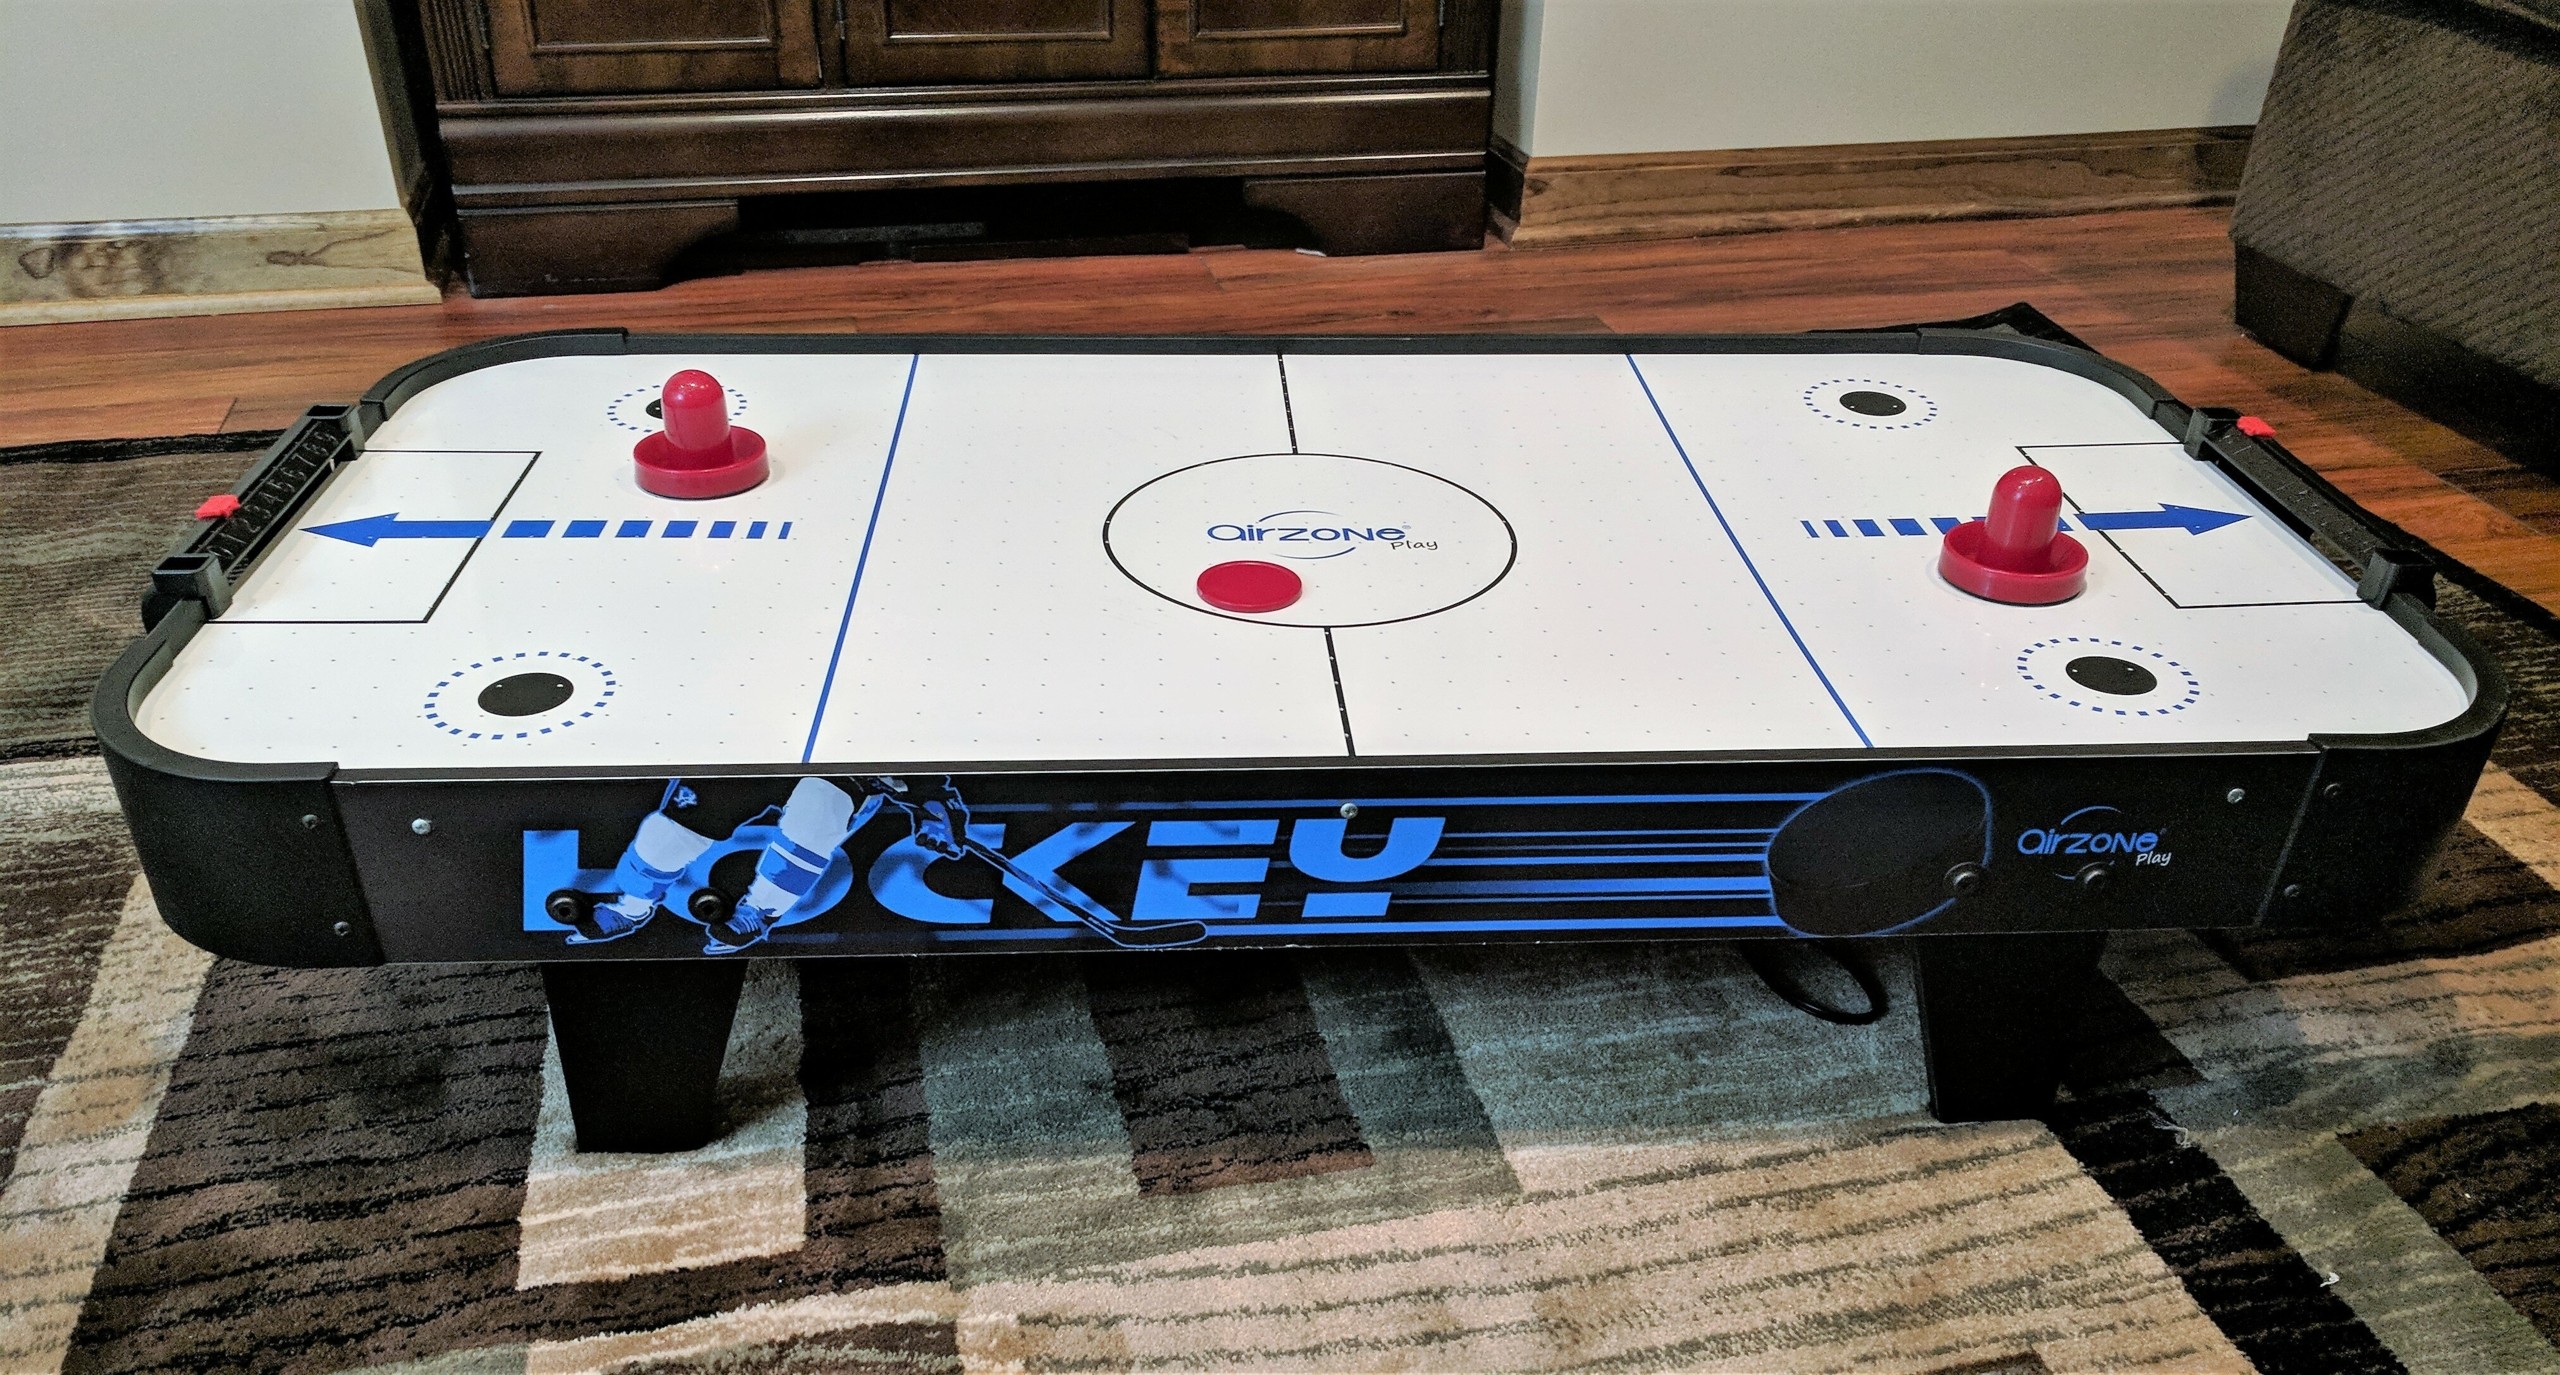 40" Air Hockey Tabletop Game